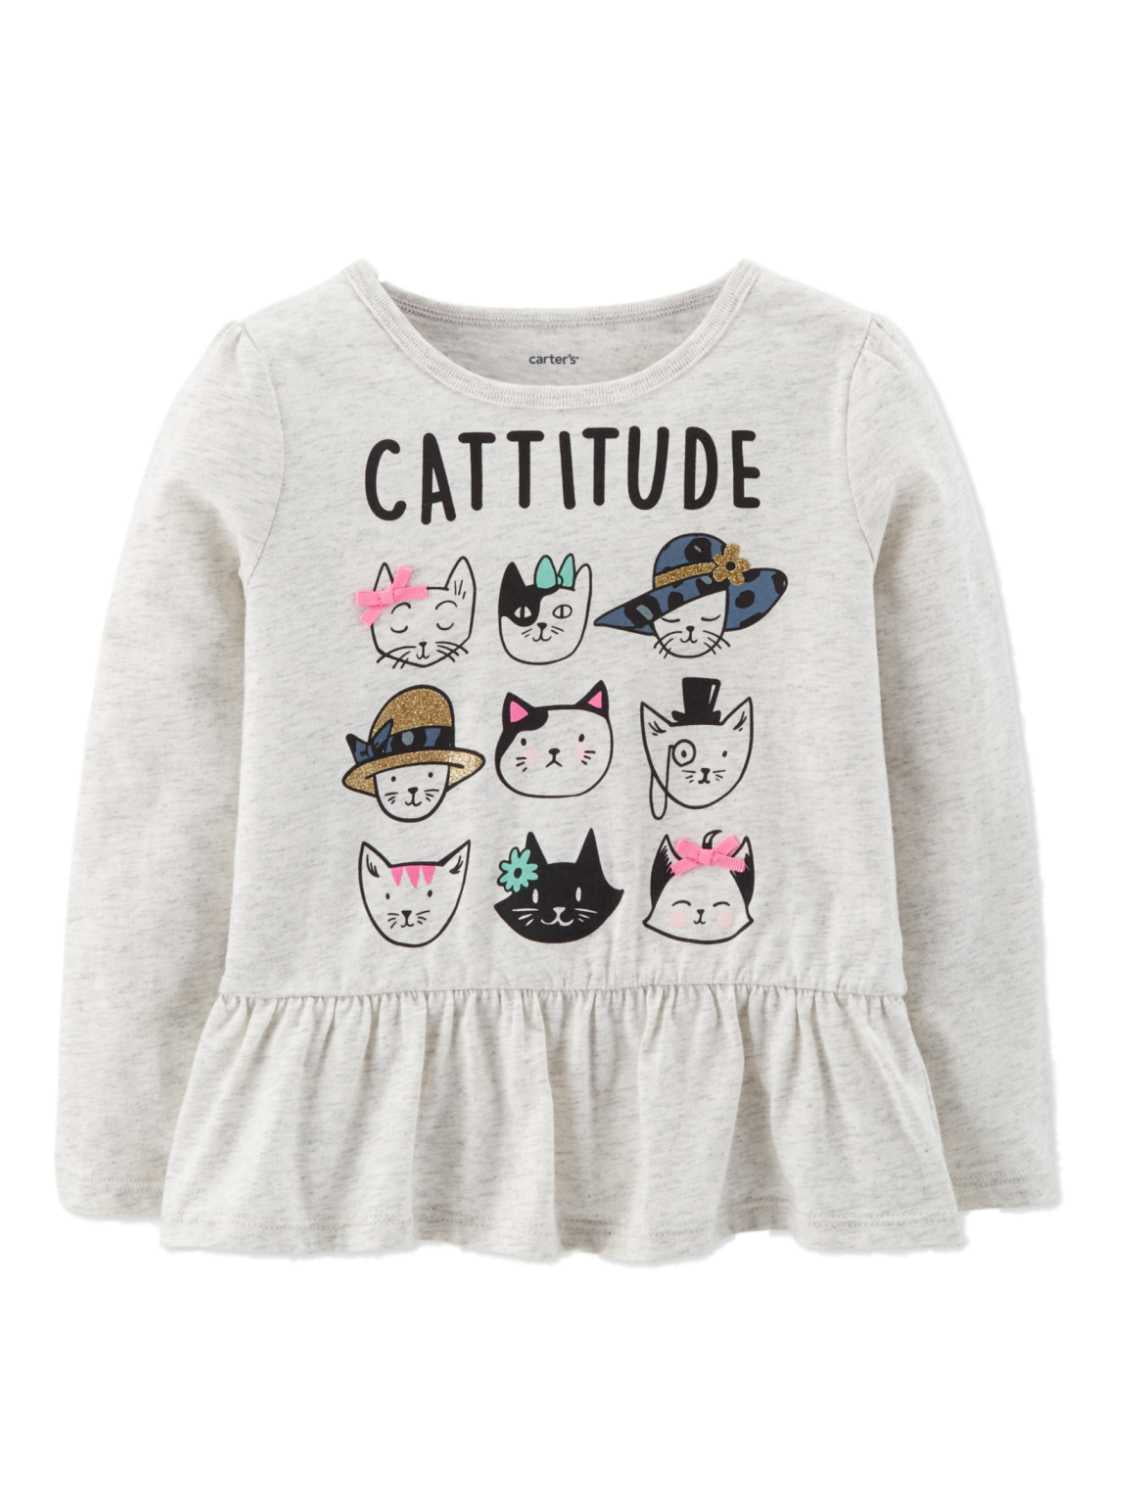 cattitude t shirt